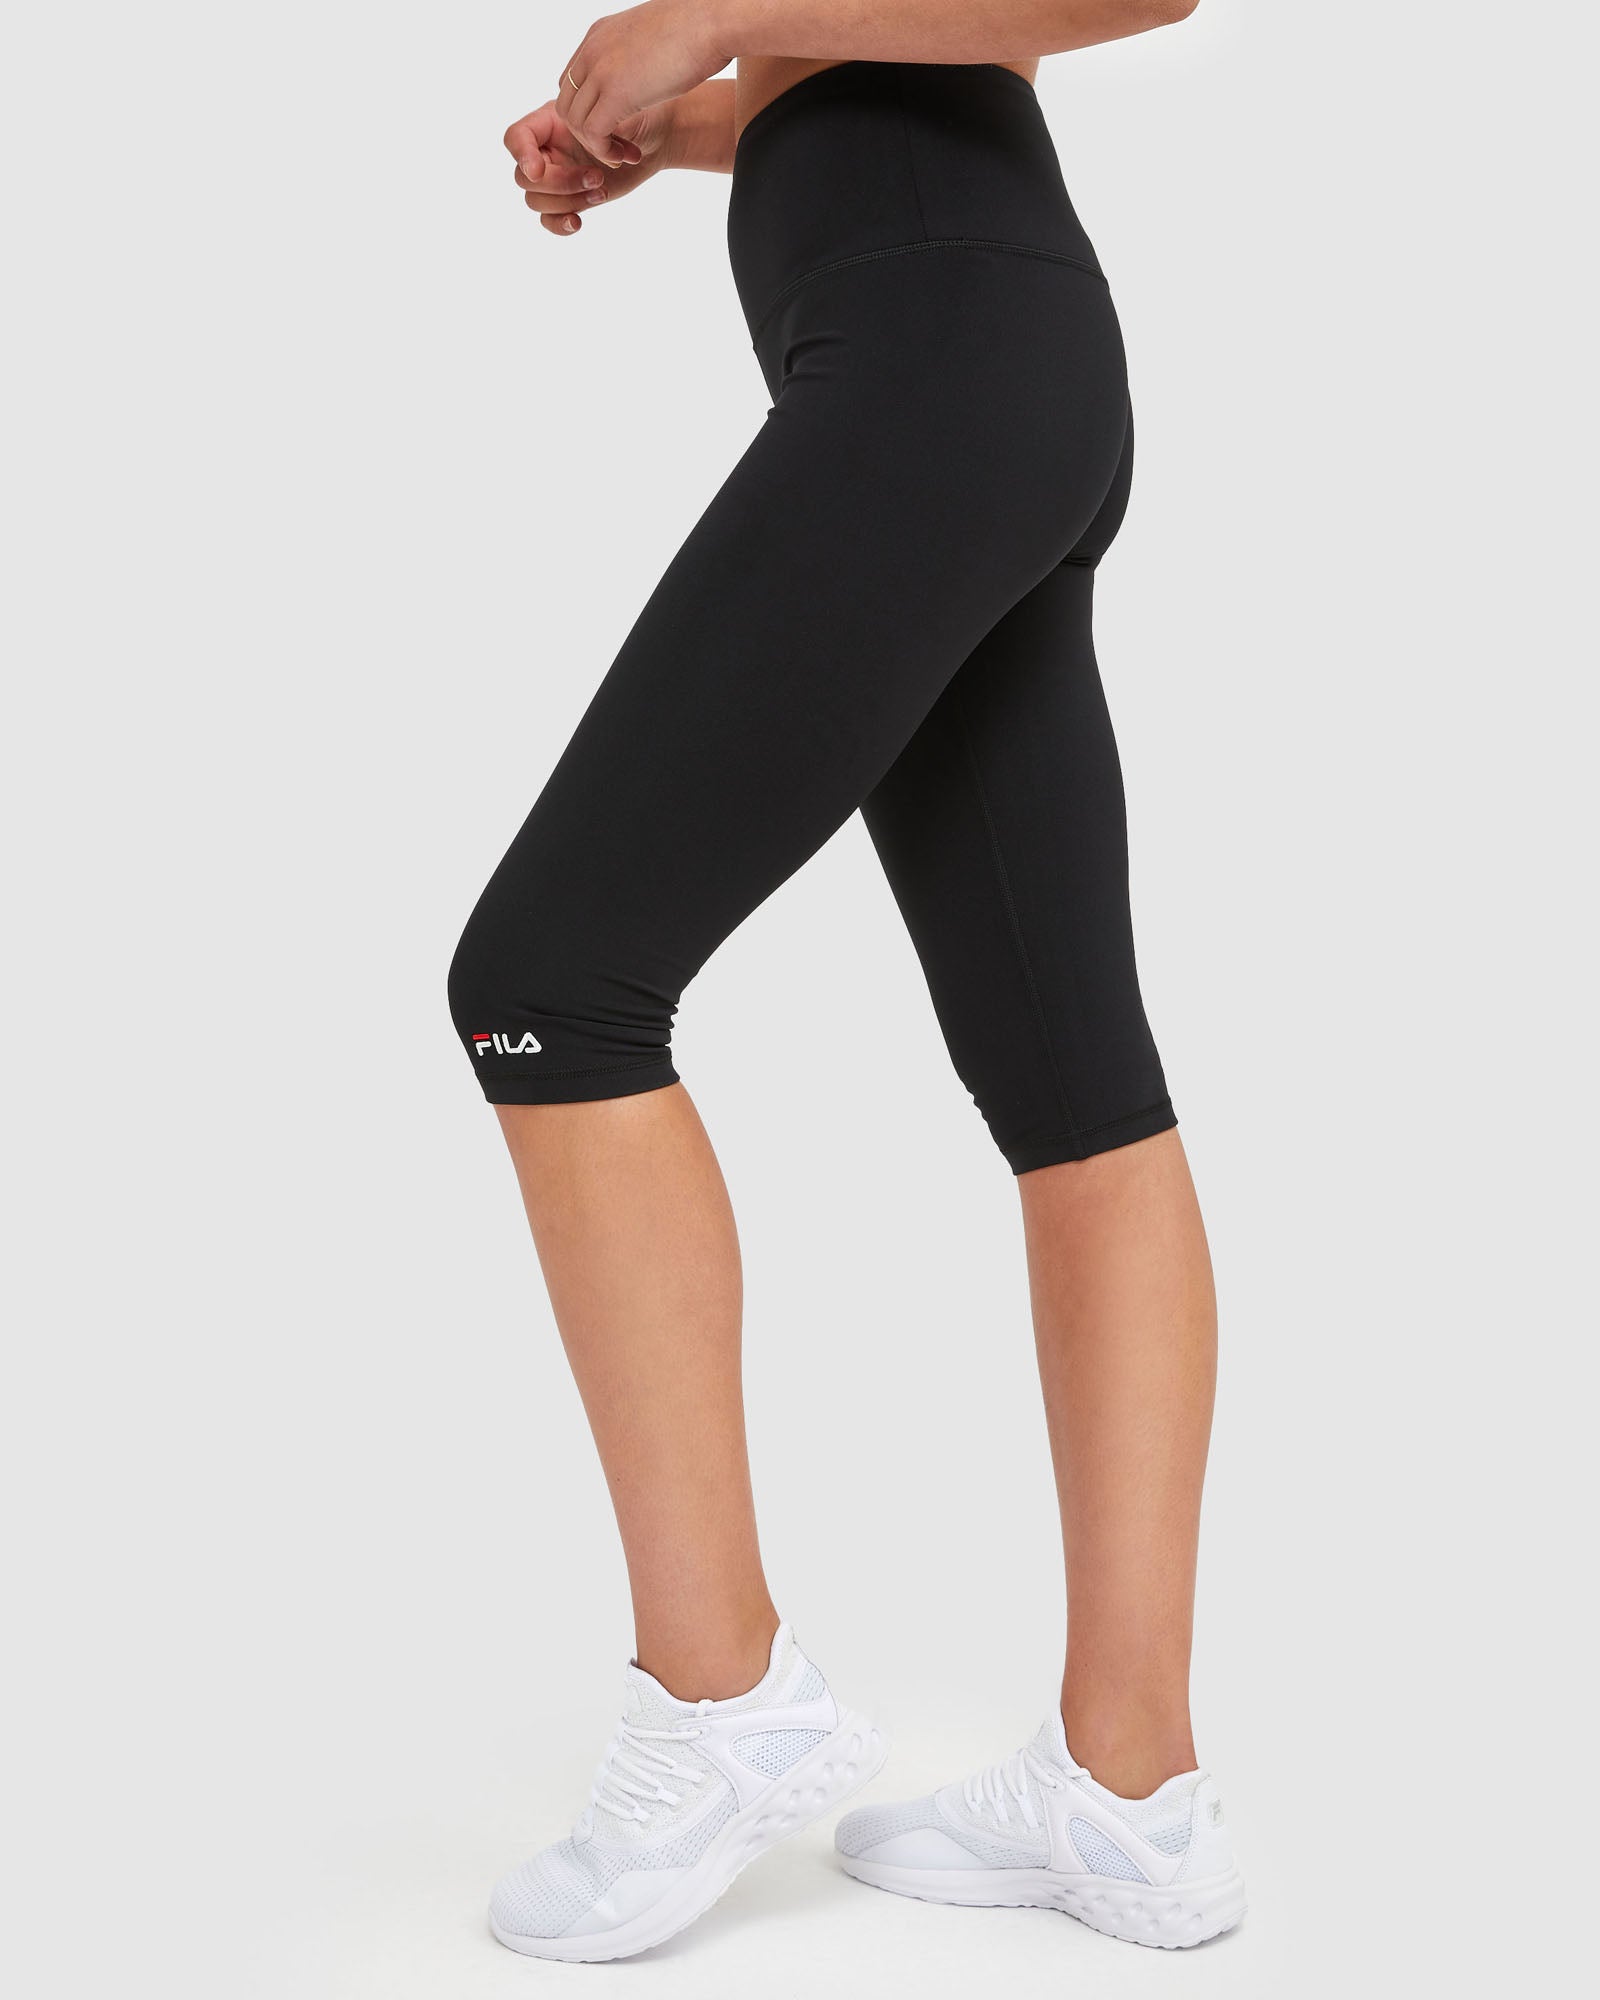 Women's Fila Sport Large Capri Leggings  Capri leggings, Clothes design,  Leggings shop